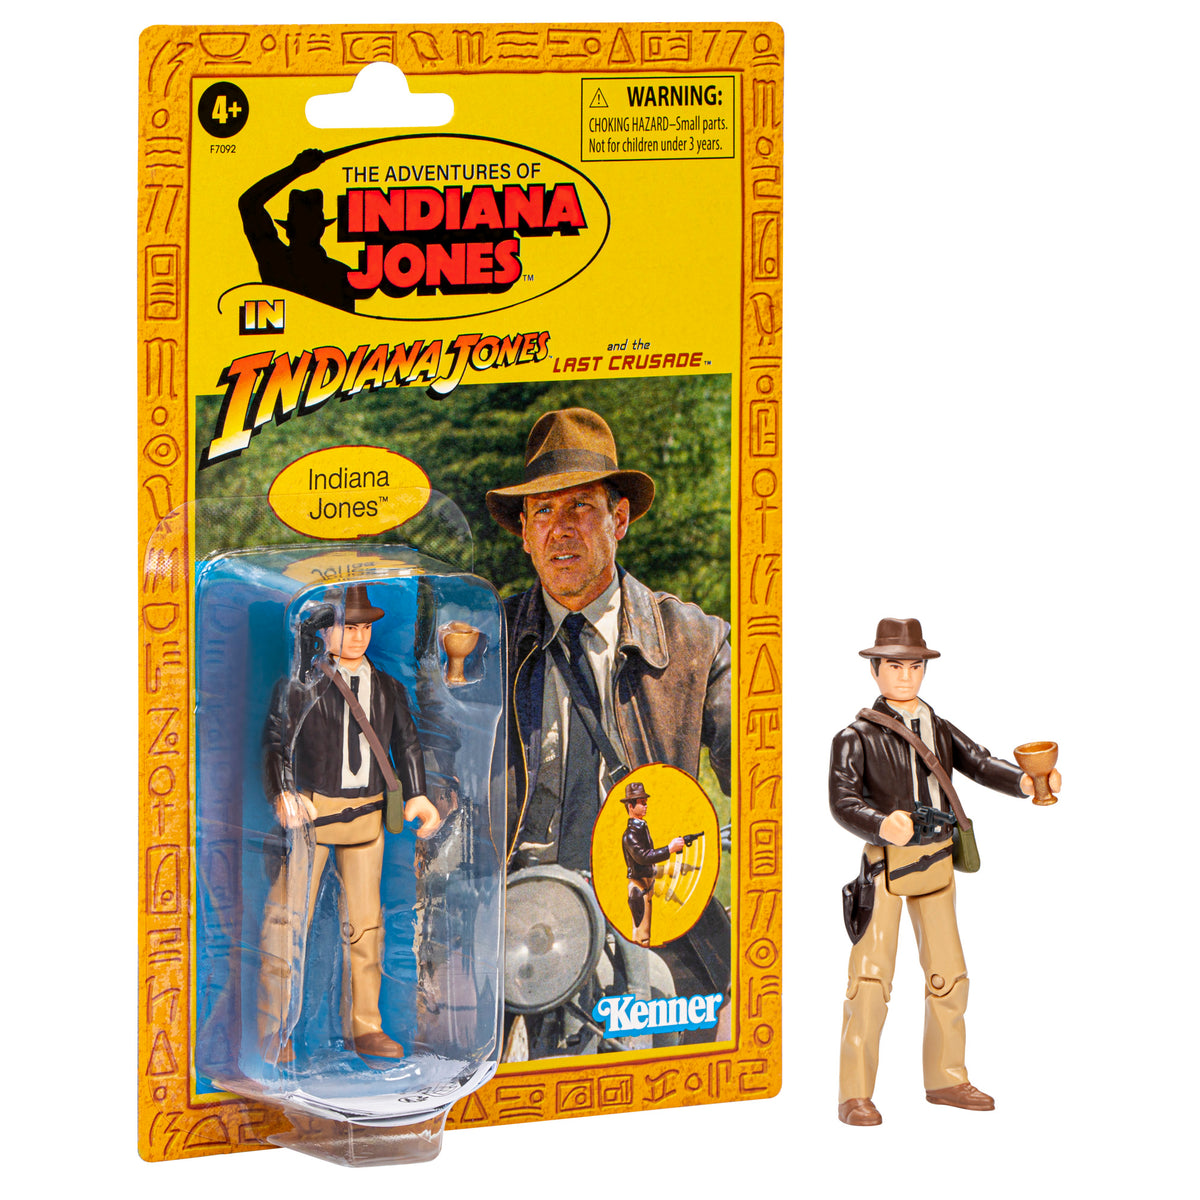 Indiana Jones and the Last Hurrah - Hasbro 2008 Action Figure Retrospective  